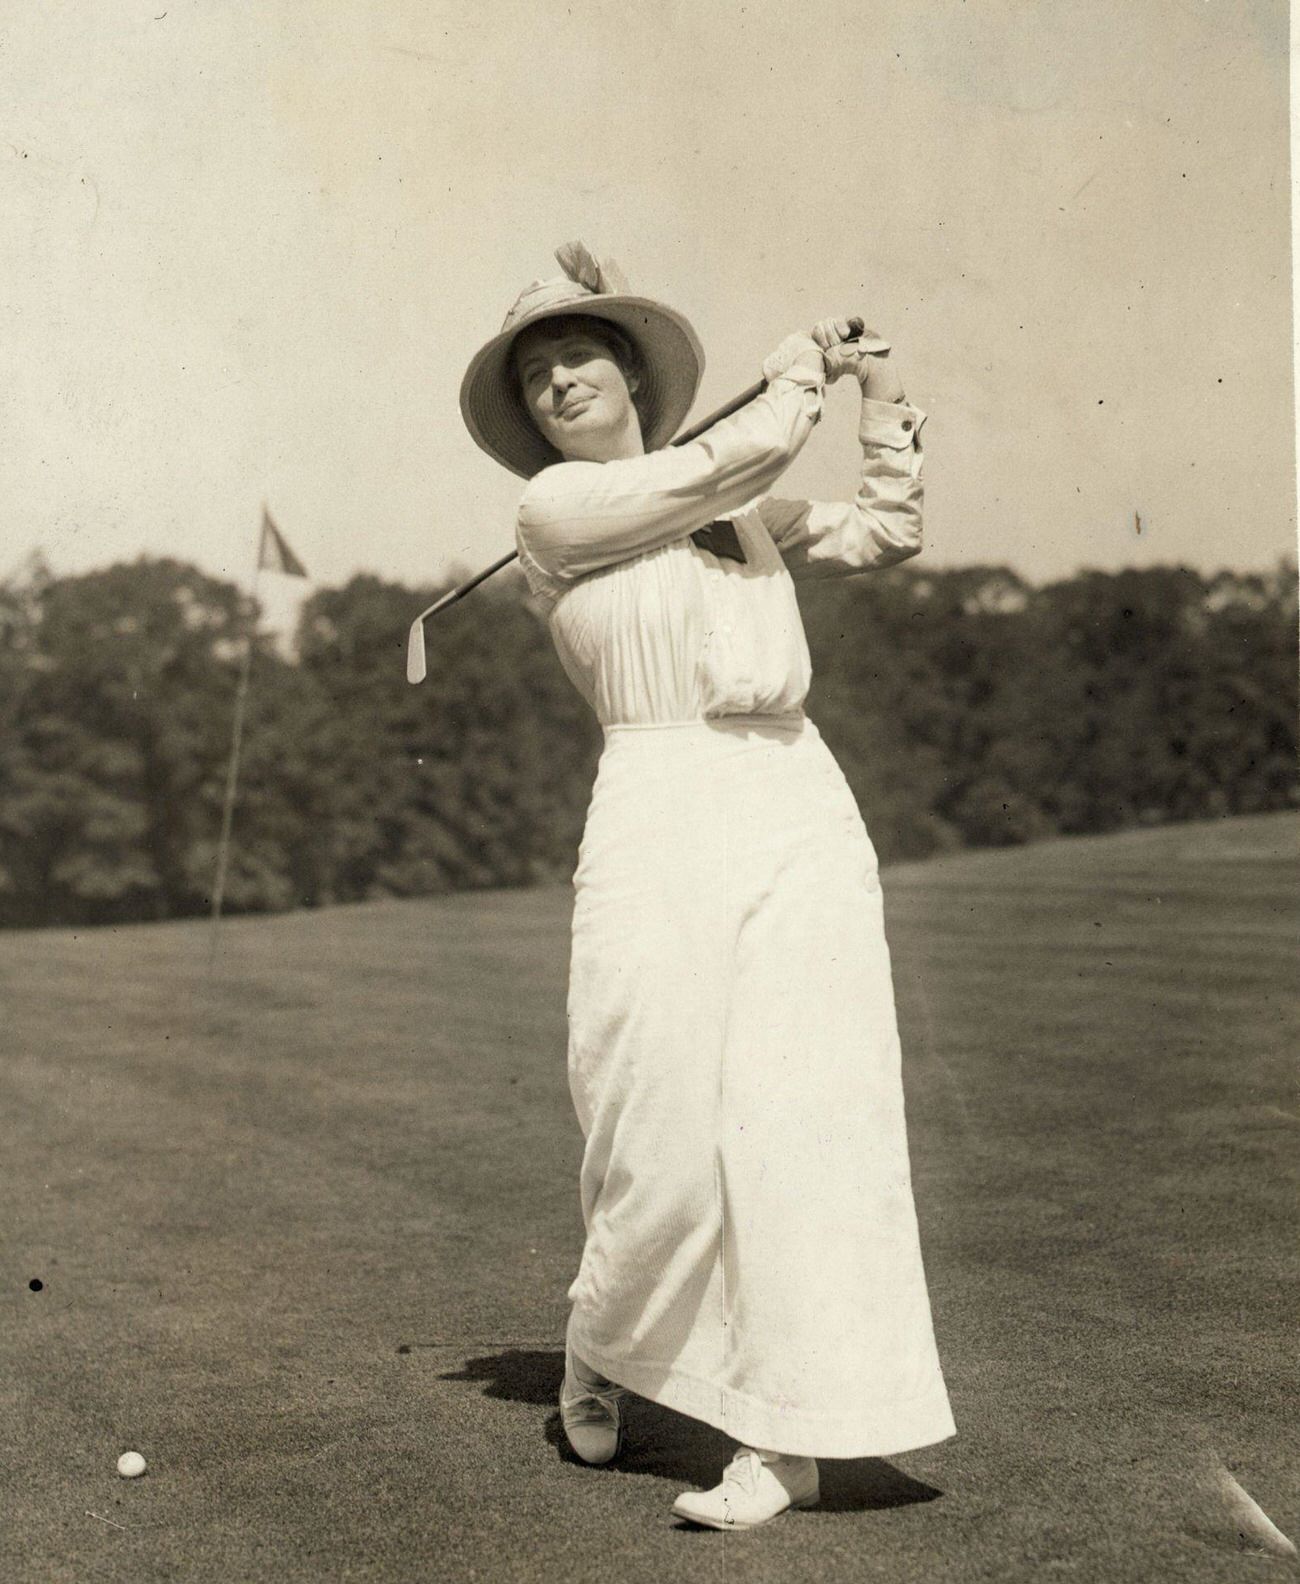 Portrait of Mrs. H. Arnold Jackson, Women's Golf Champion, circa 1900s.